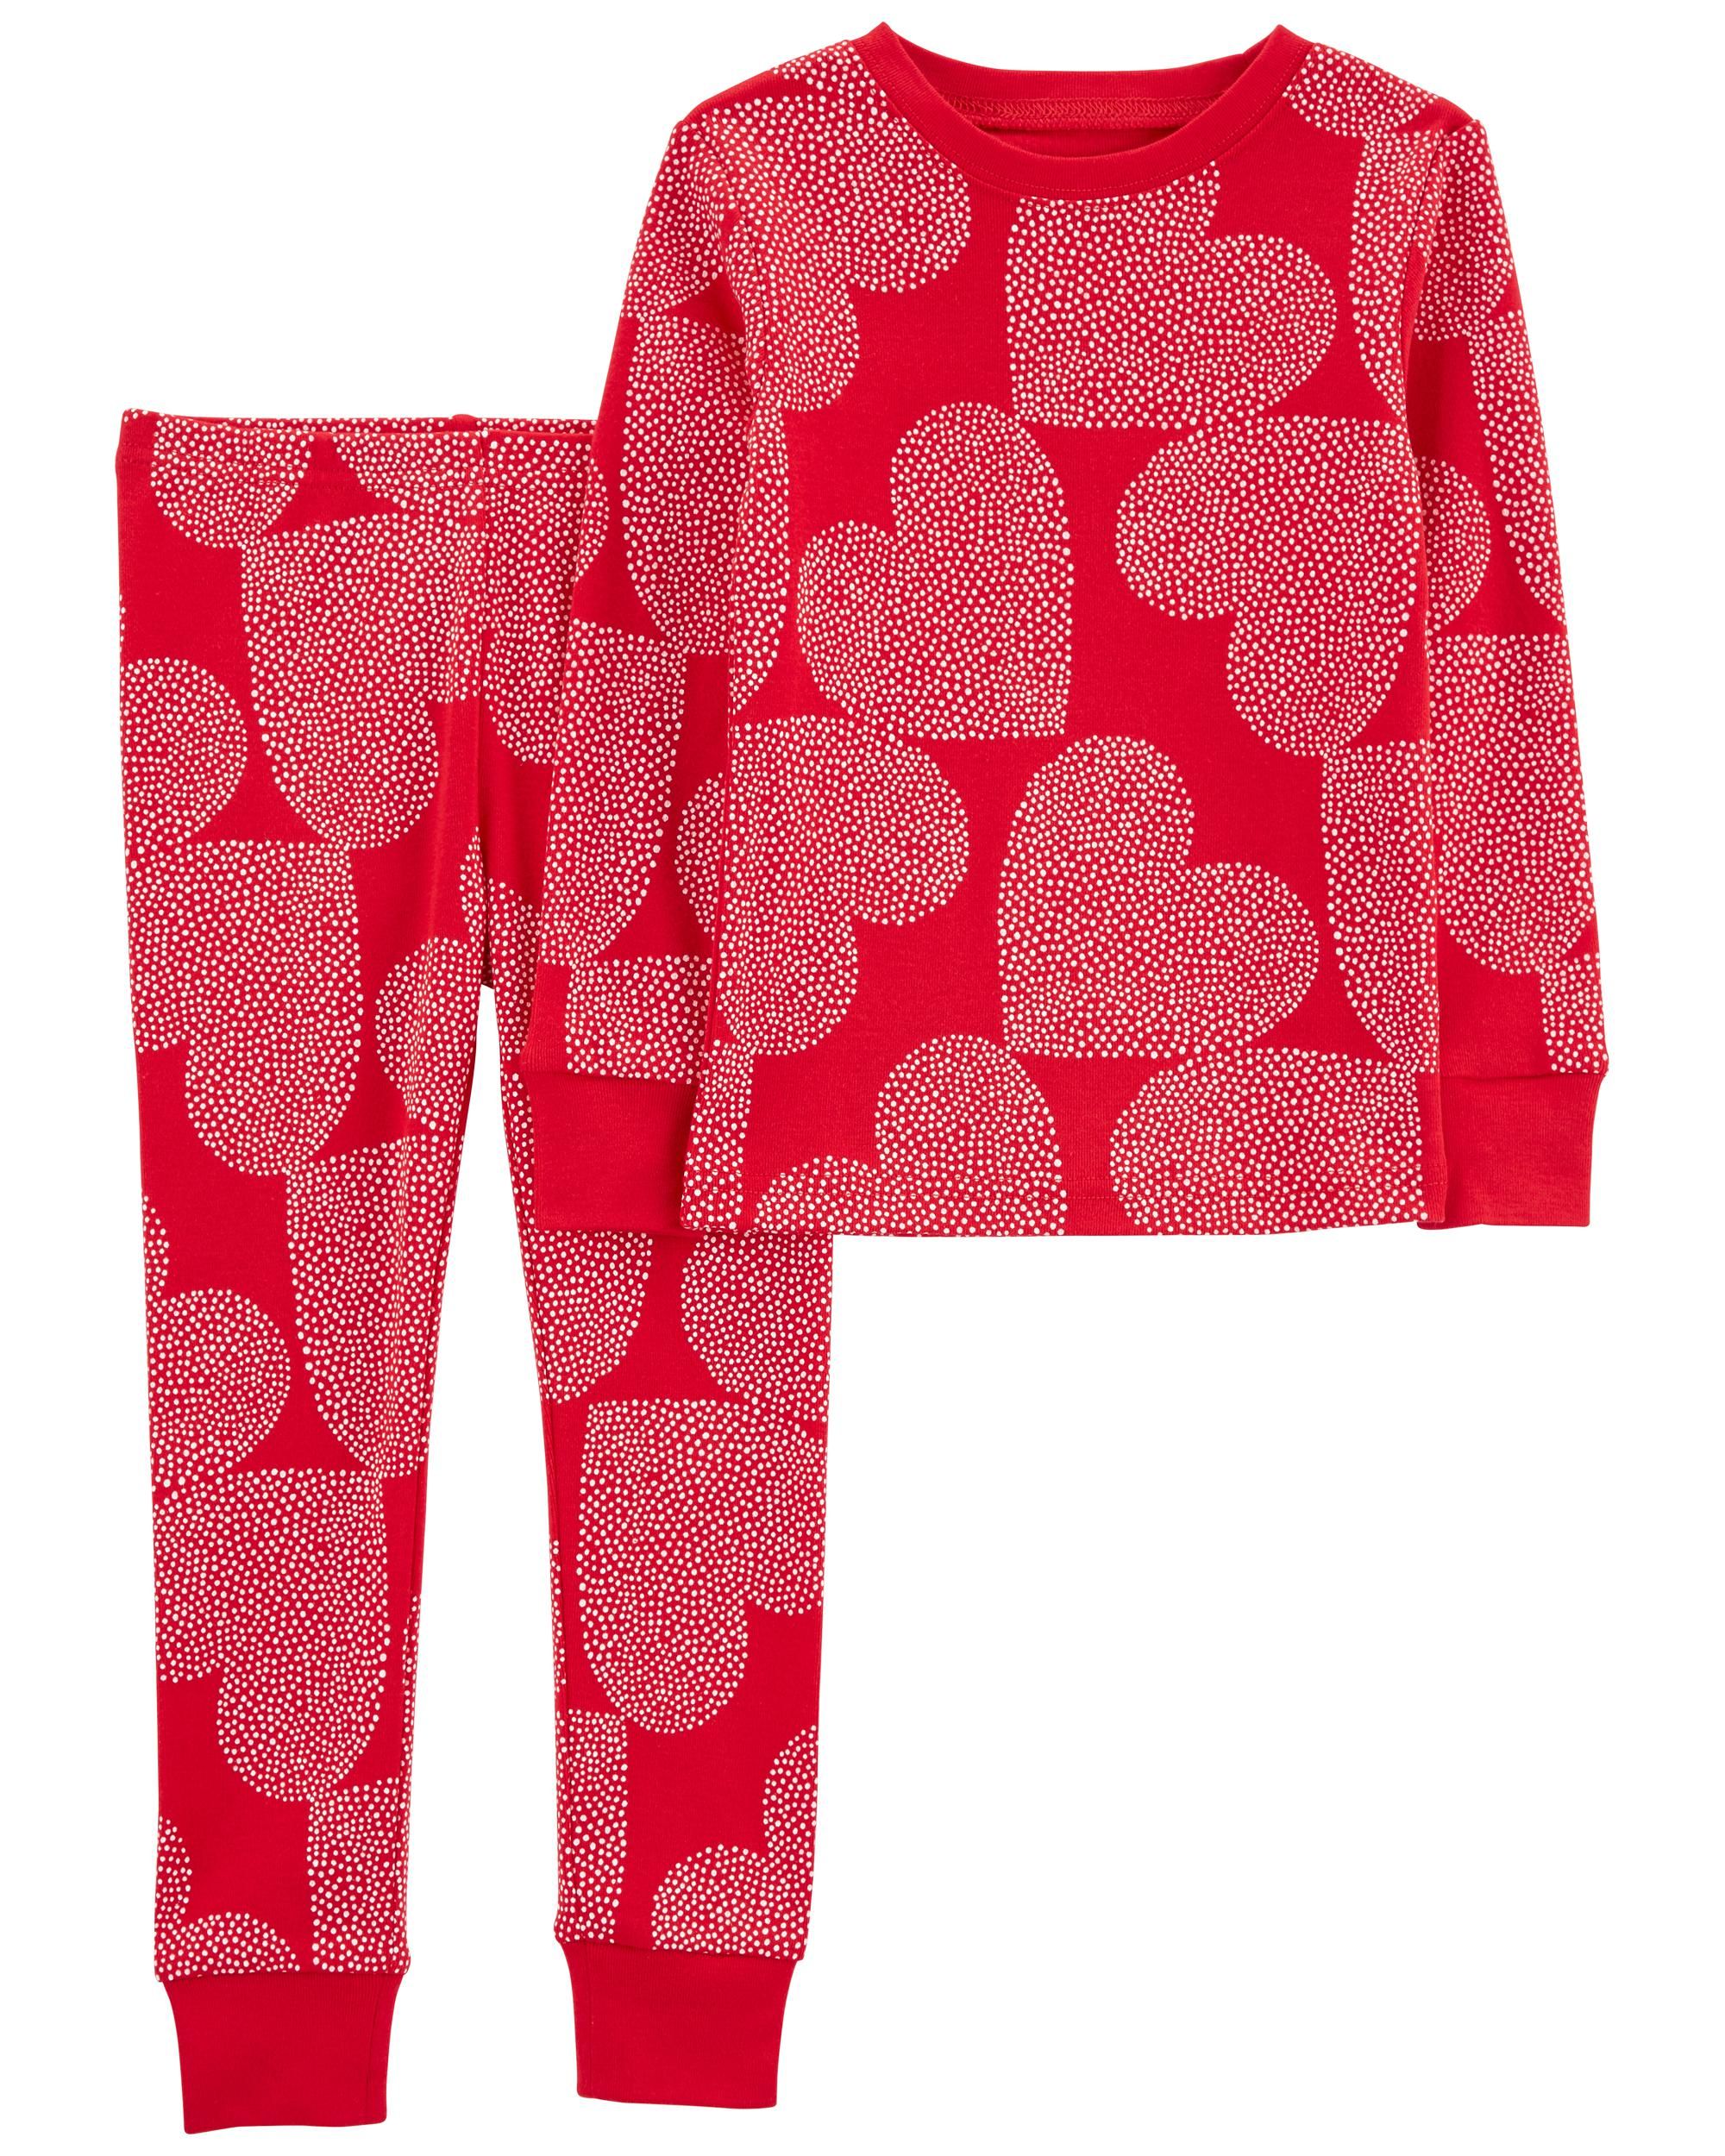 Toddler 2-Piece Heart 100% Snug Fit Cotton PJs | carters.com | Carter's